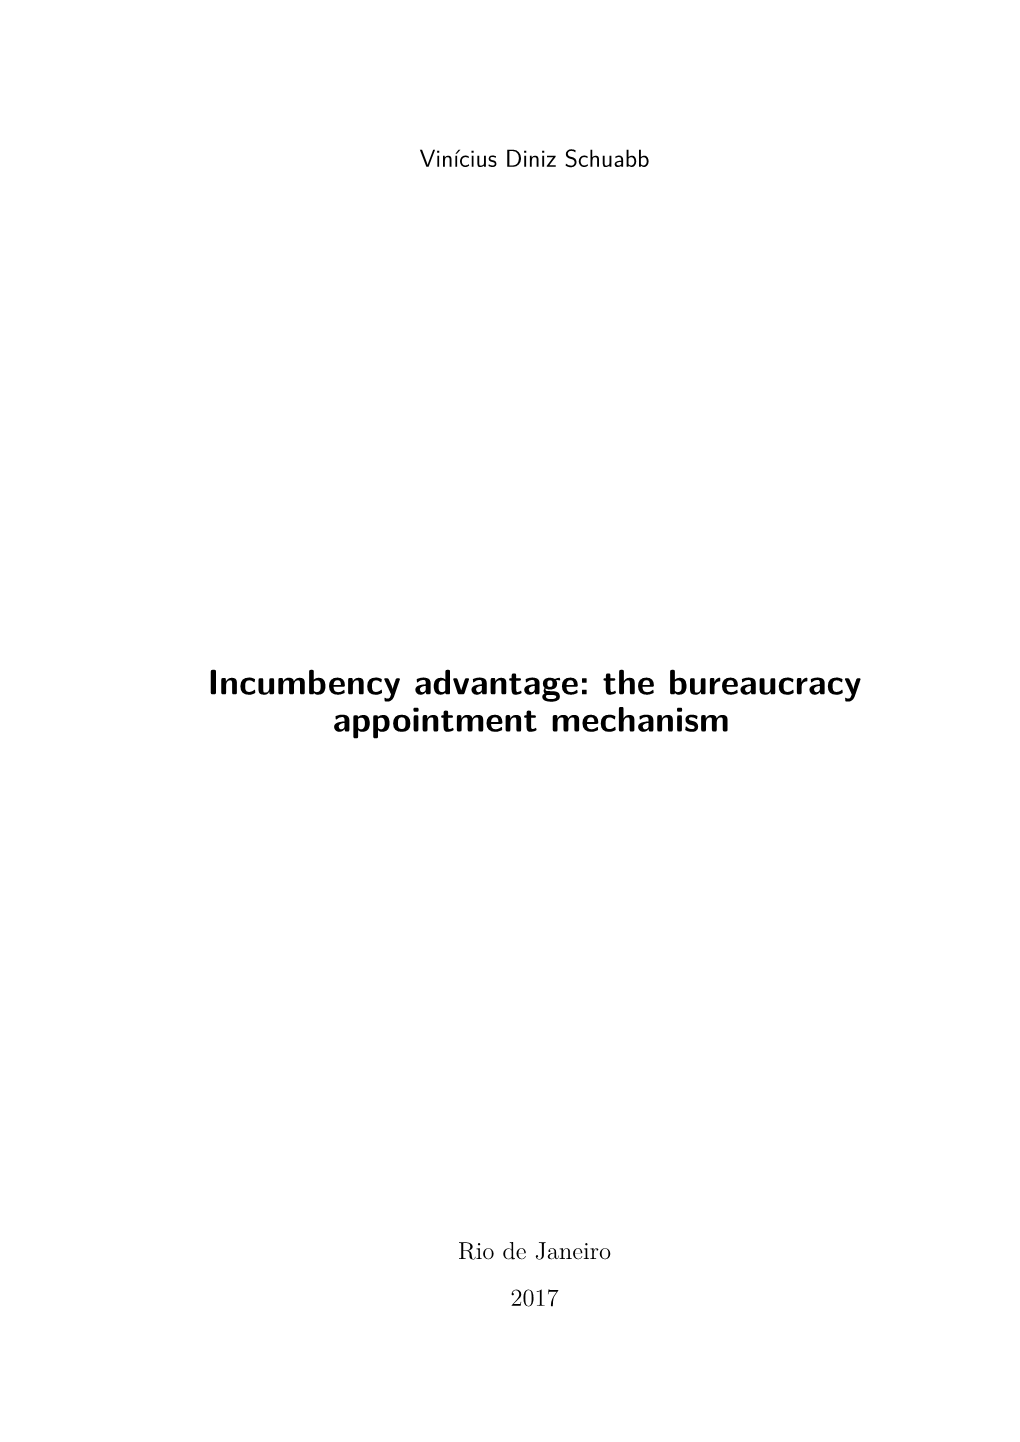 Incumbency Advantage: the Bureaucracy Appointment Mechanism